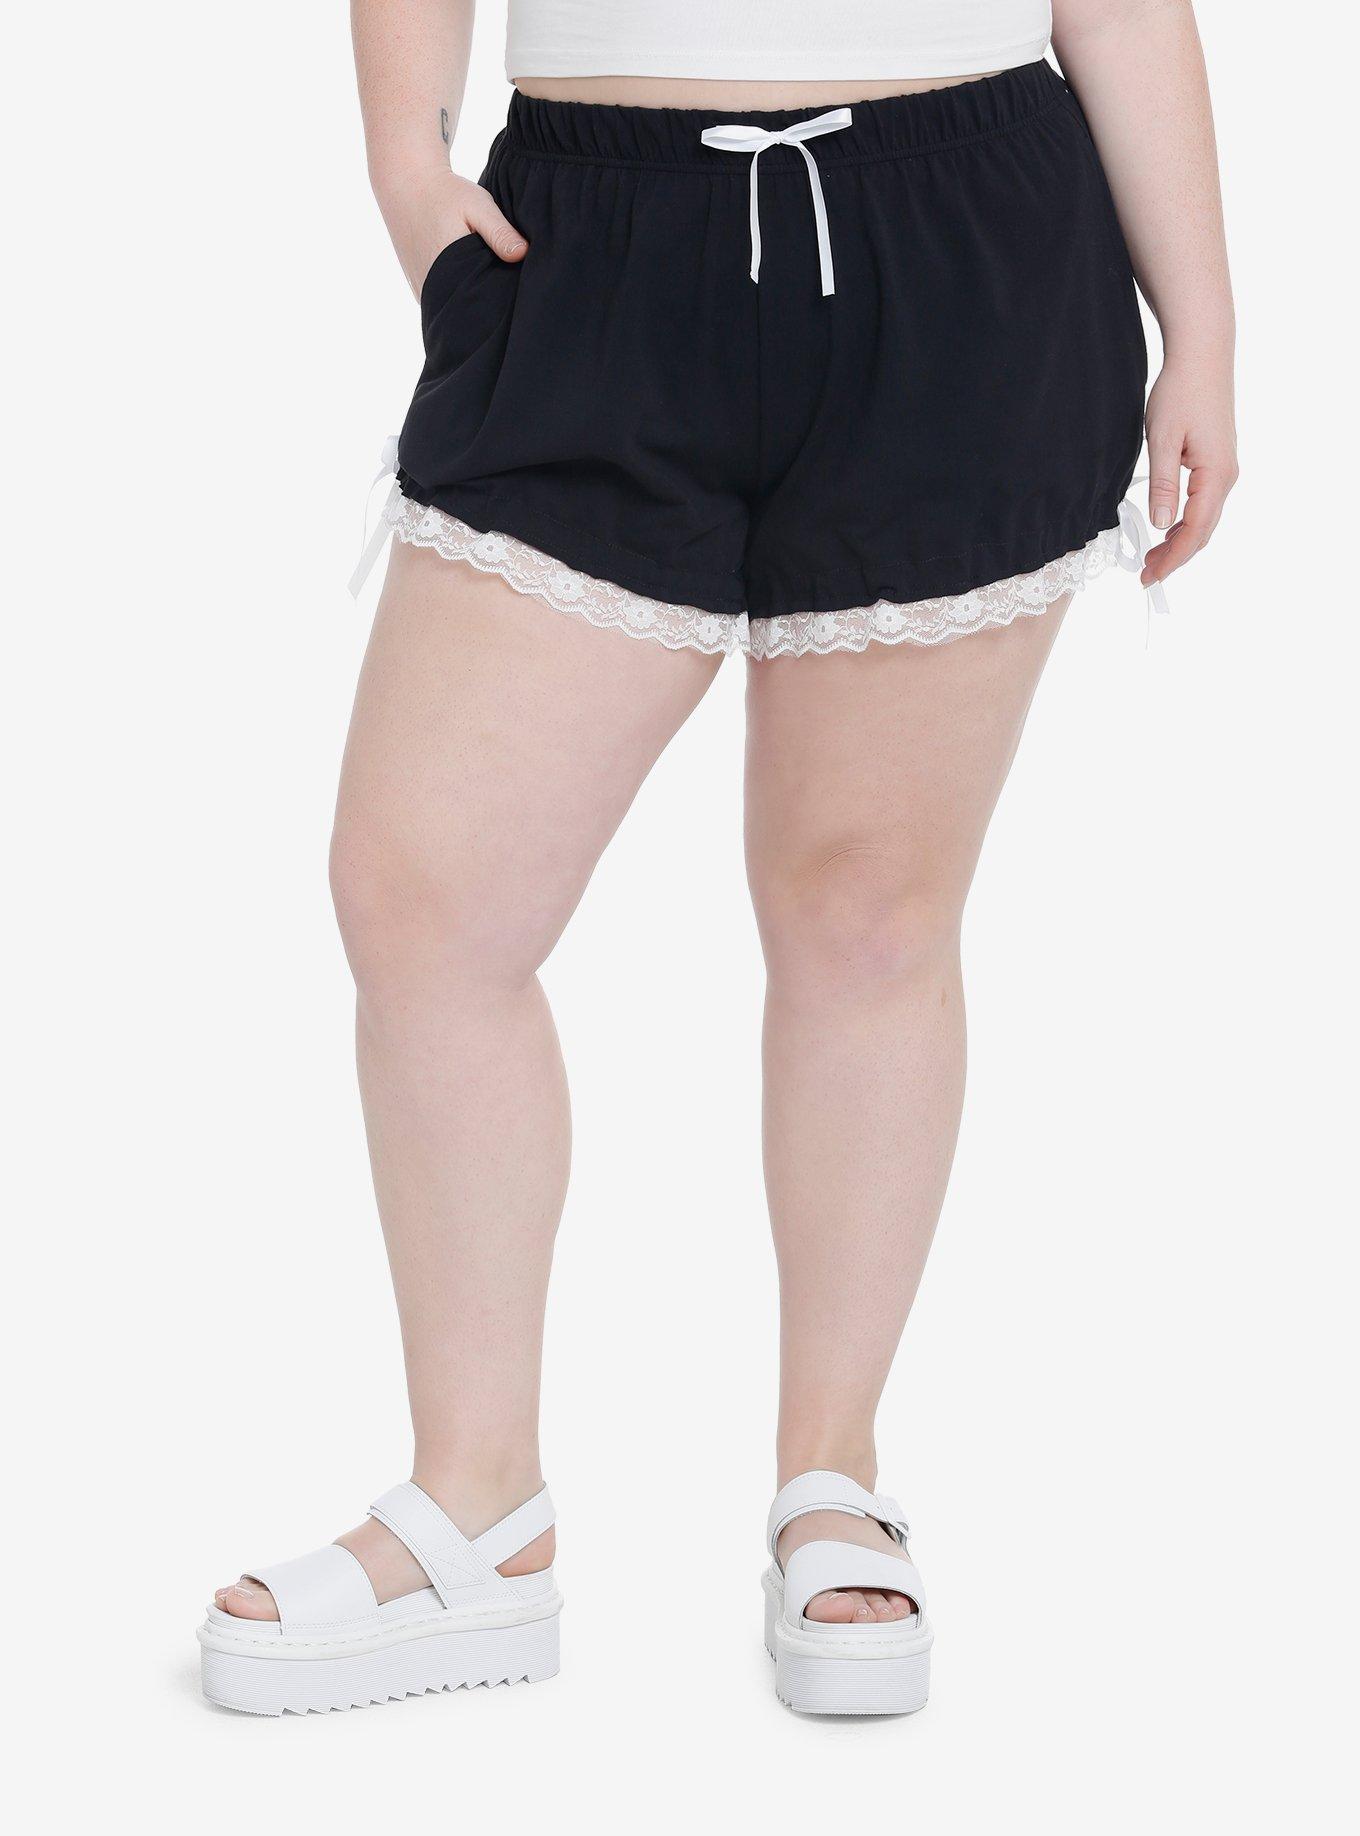 Black & White Lace Balloon Lounge Shorts Plus Size, BLACK, hi-res